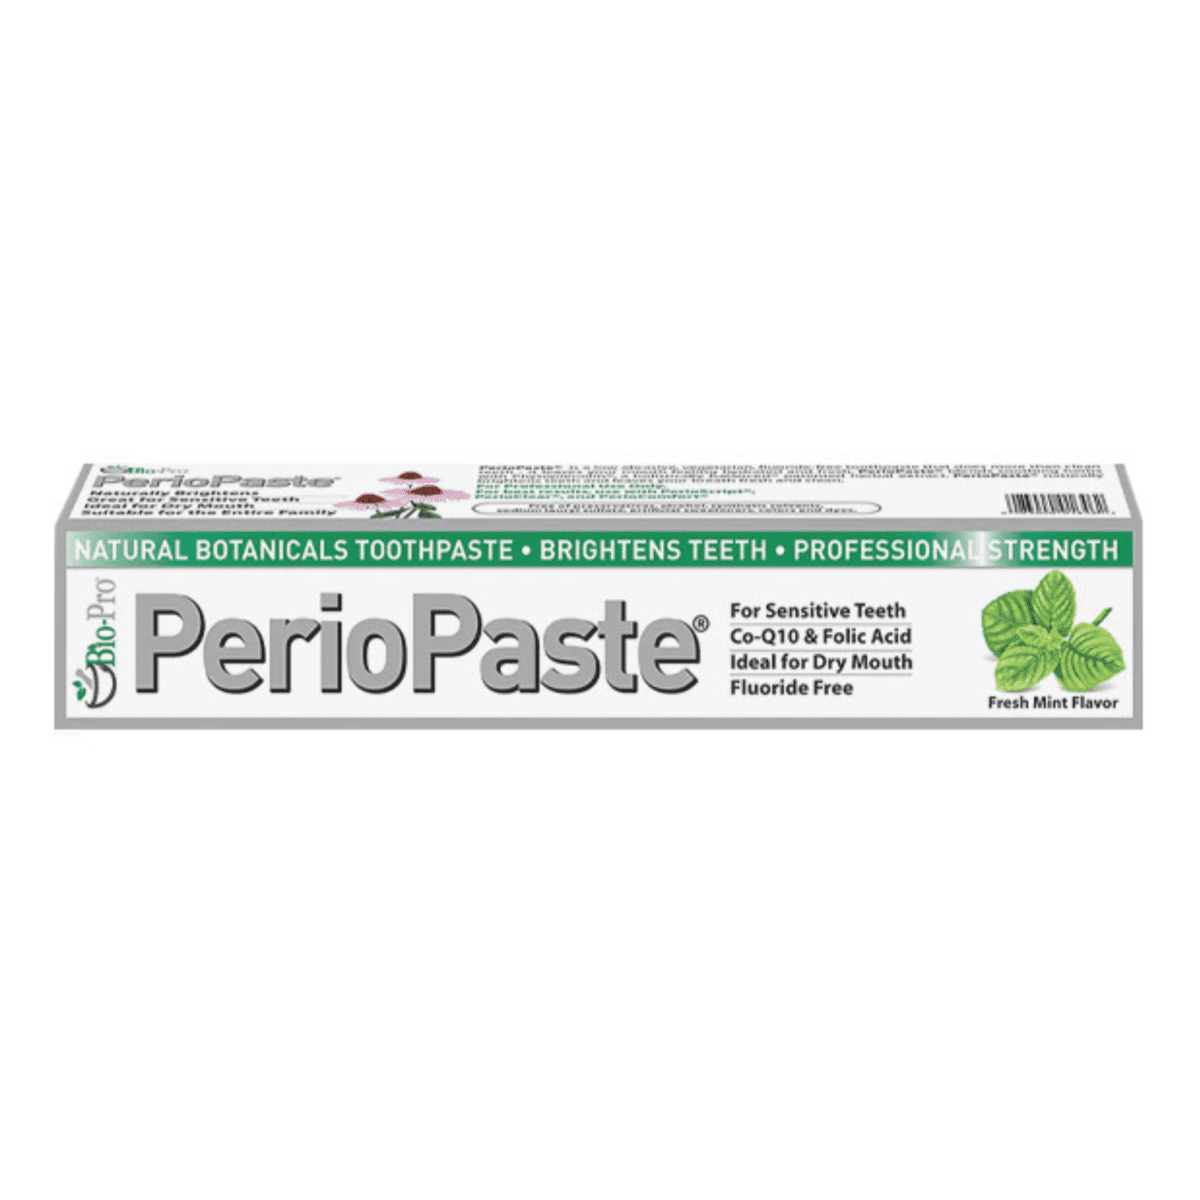 A box of PerioPaste toothpaste.